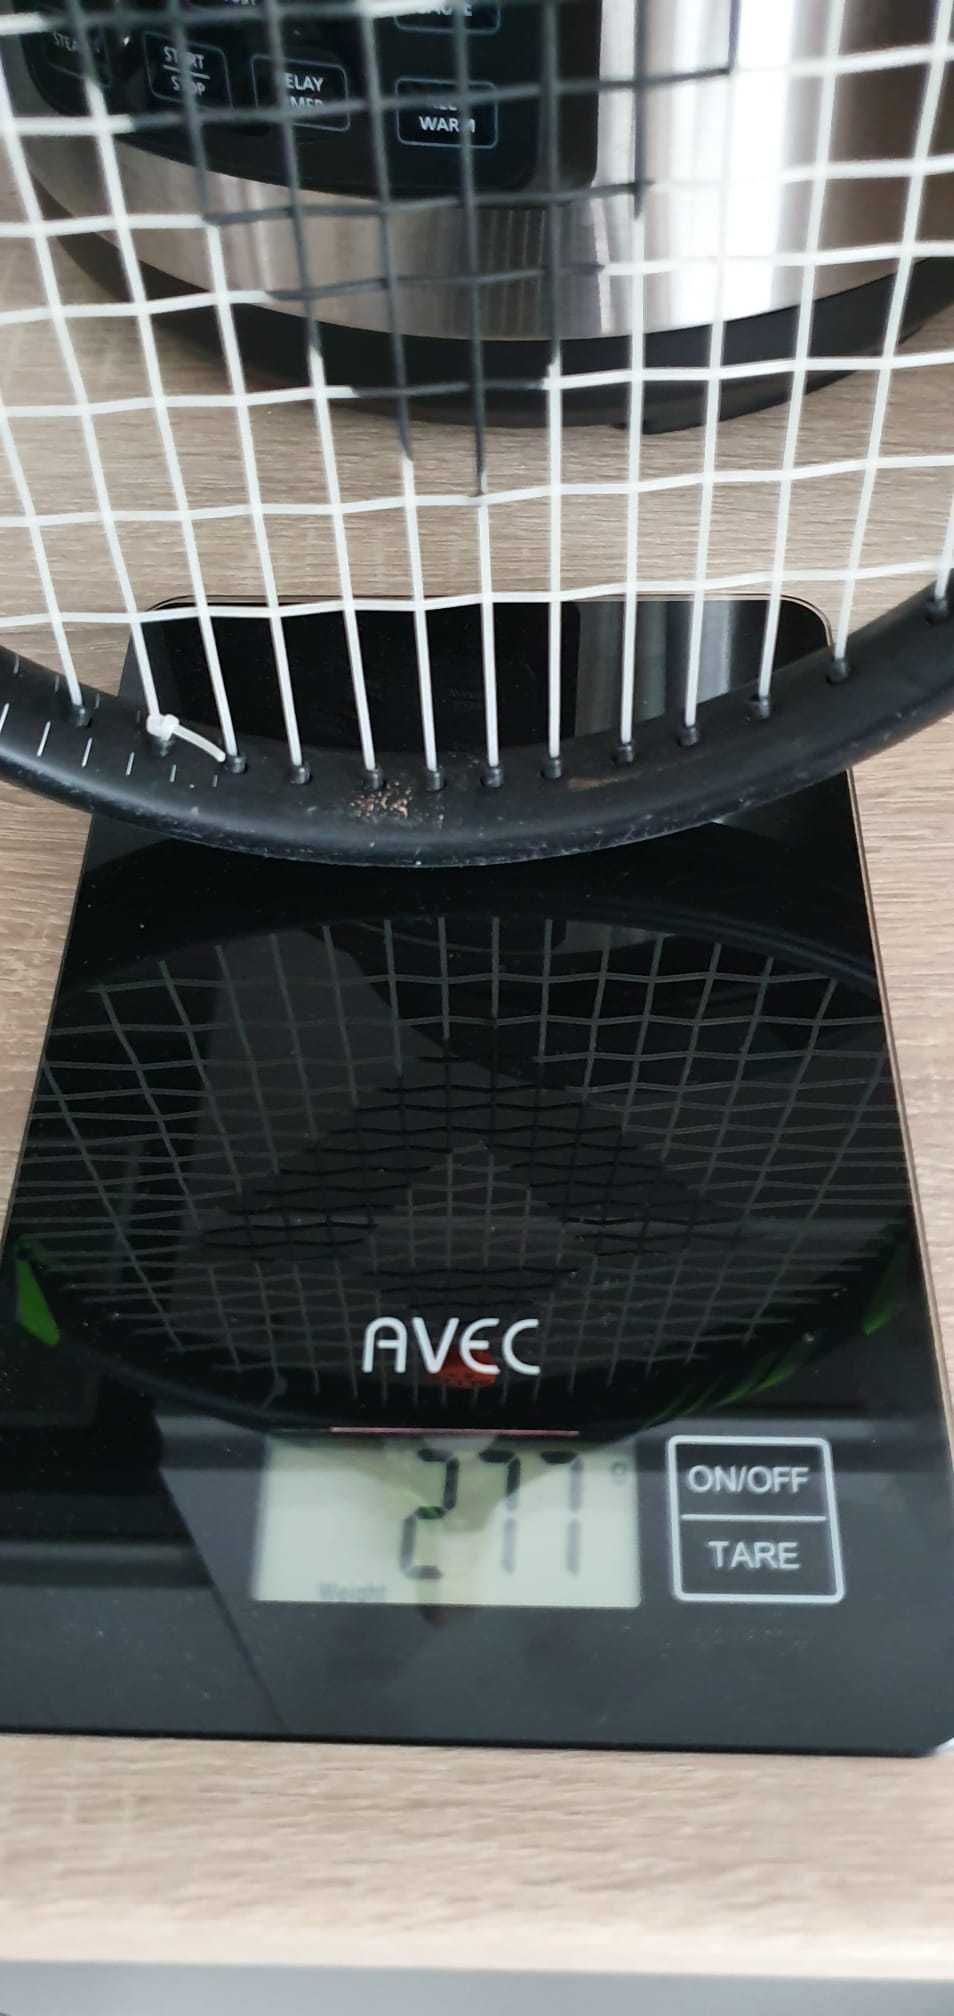 Tecno Pro PS Access MP Graphite Tennis Racket New Overgrip